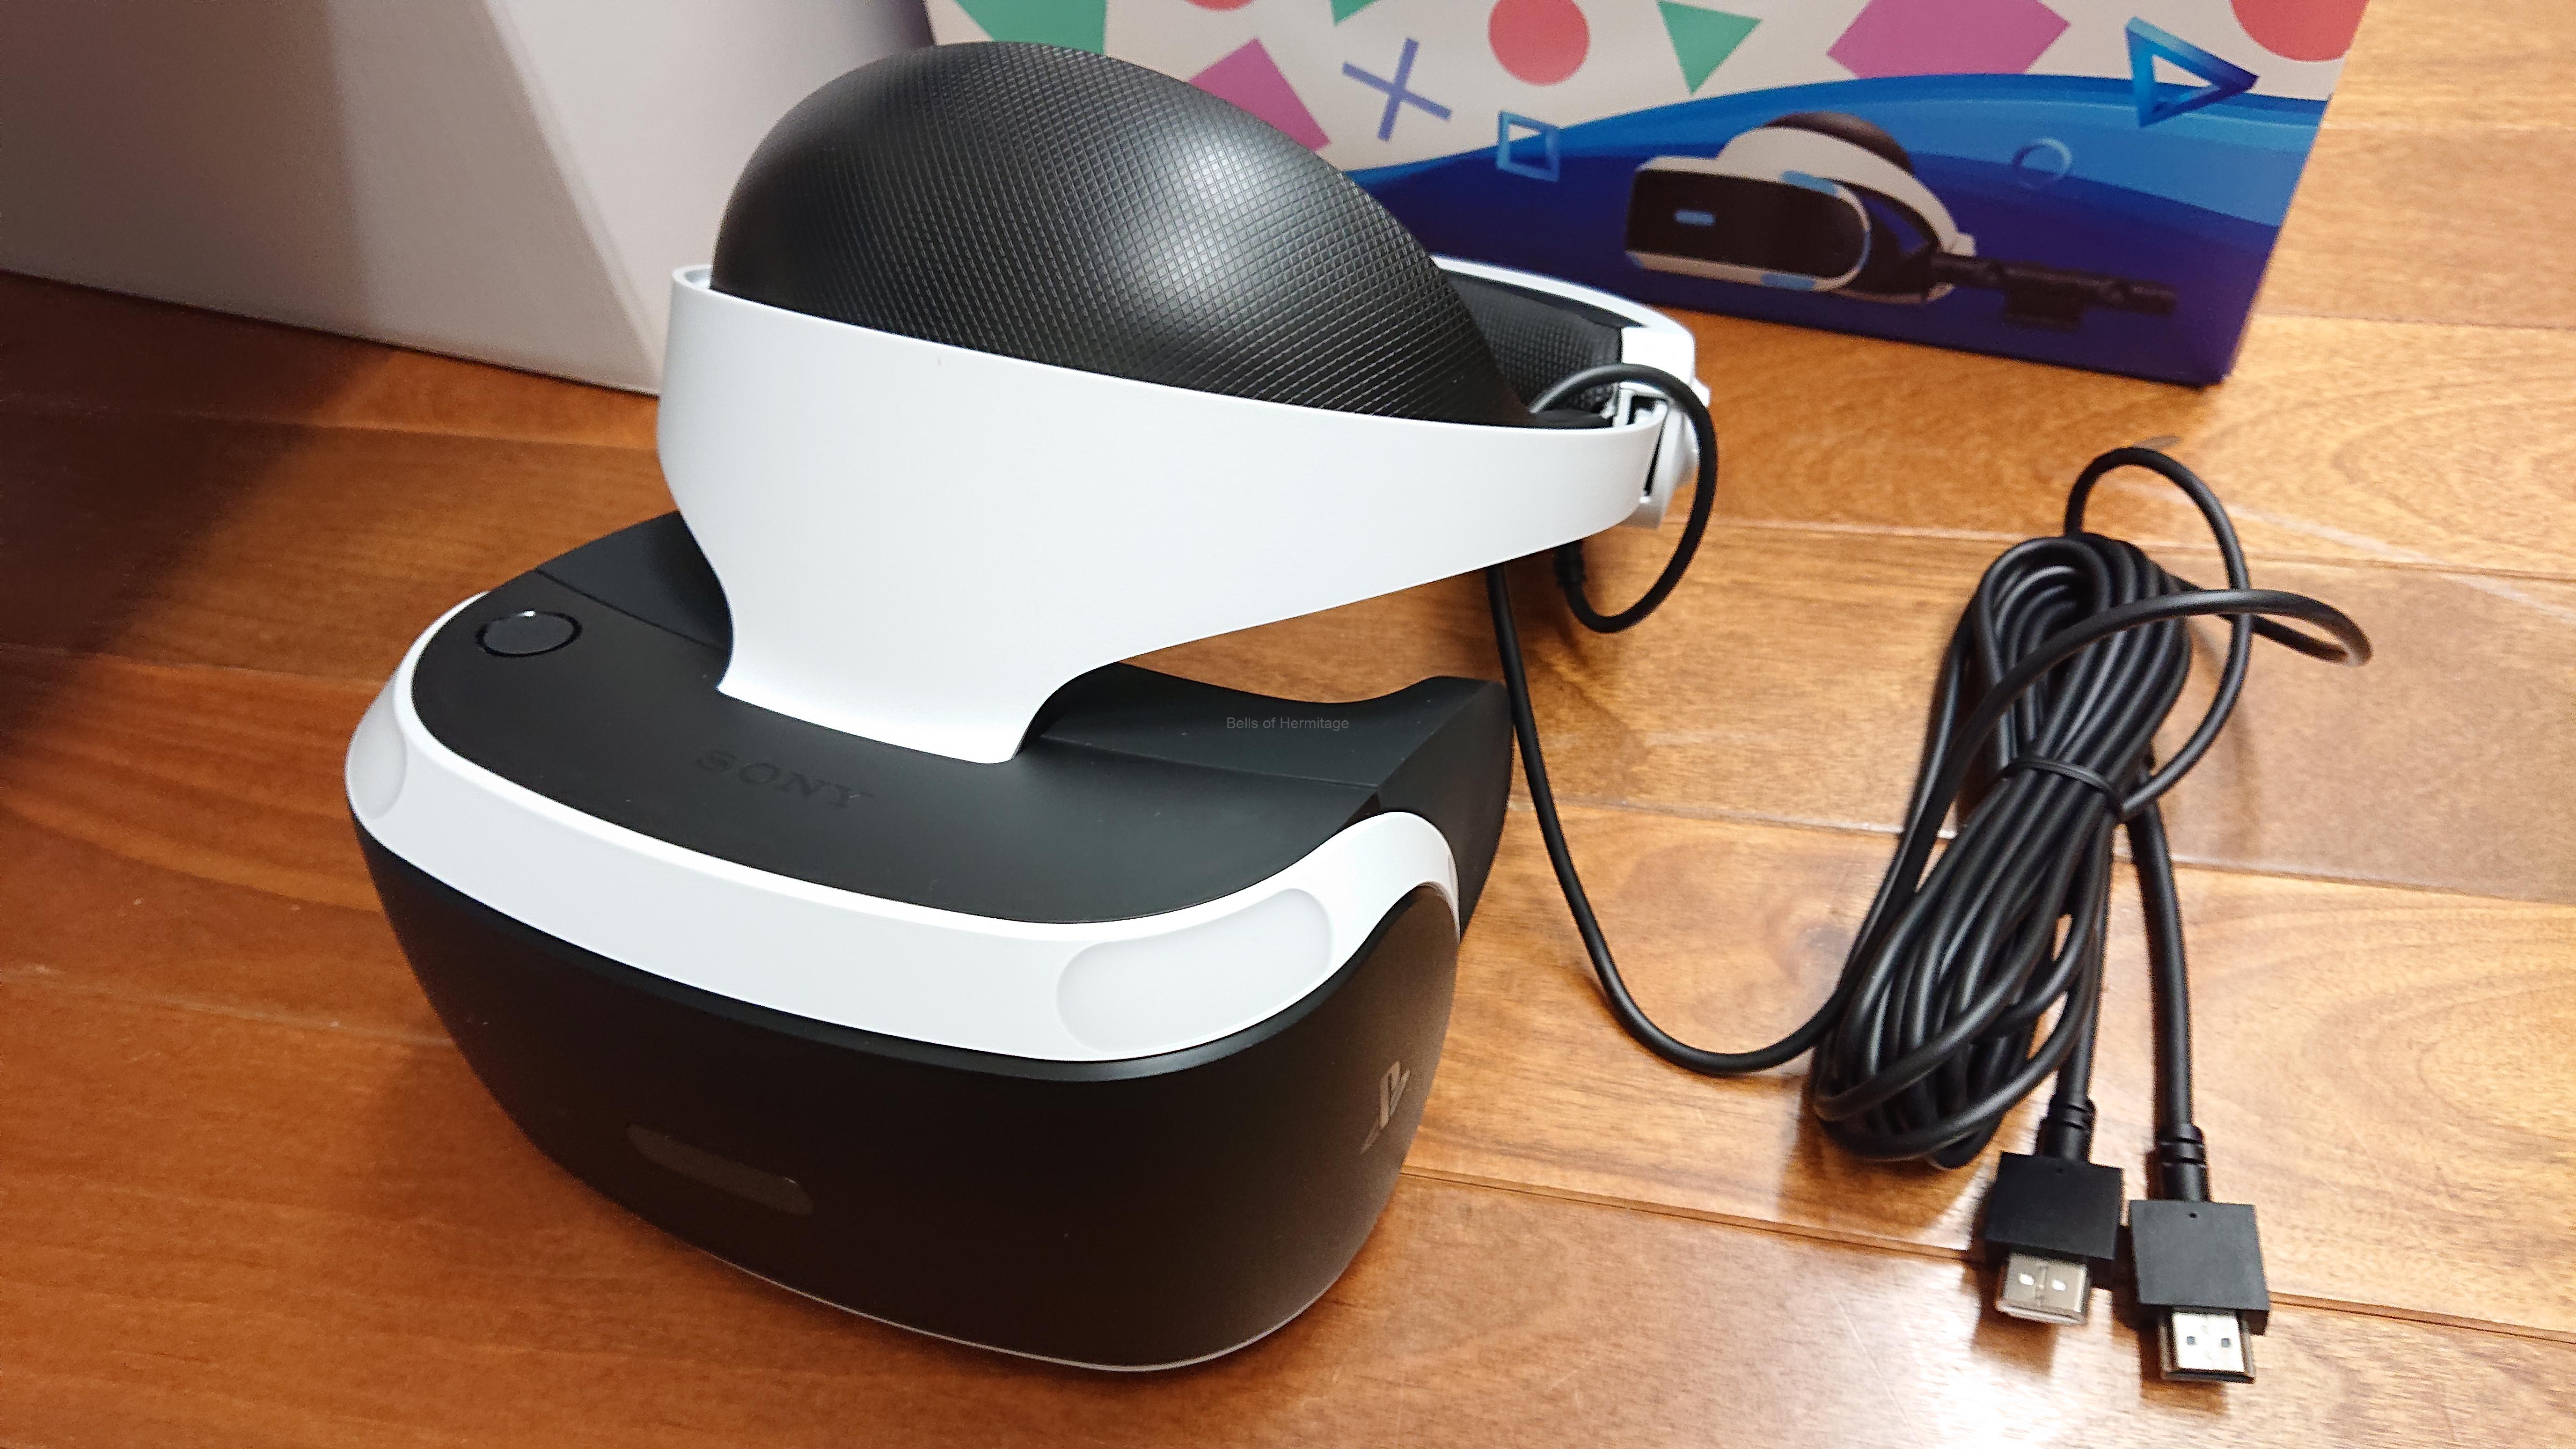 PlayStation VRを始めよう！Special Offer(CUHJ-16007)を開封＠PlayStation VR環境構築(1) |  Bells of Hermitage～エルミタージュの鐘～